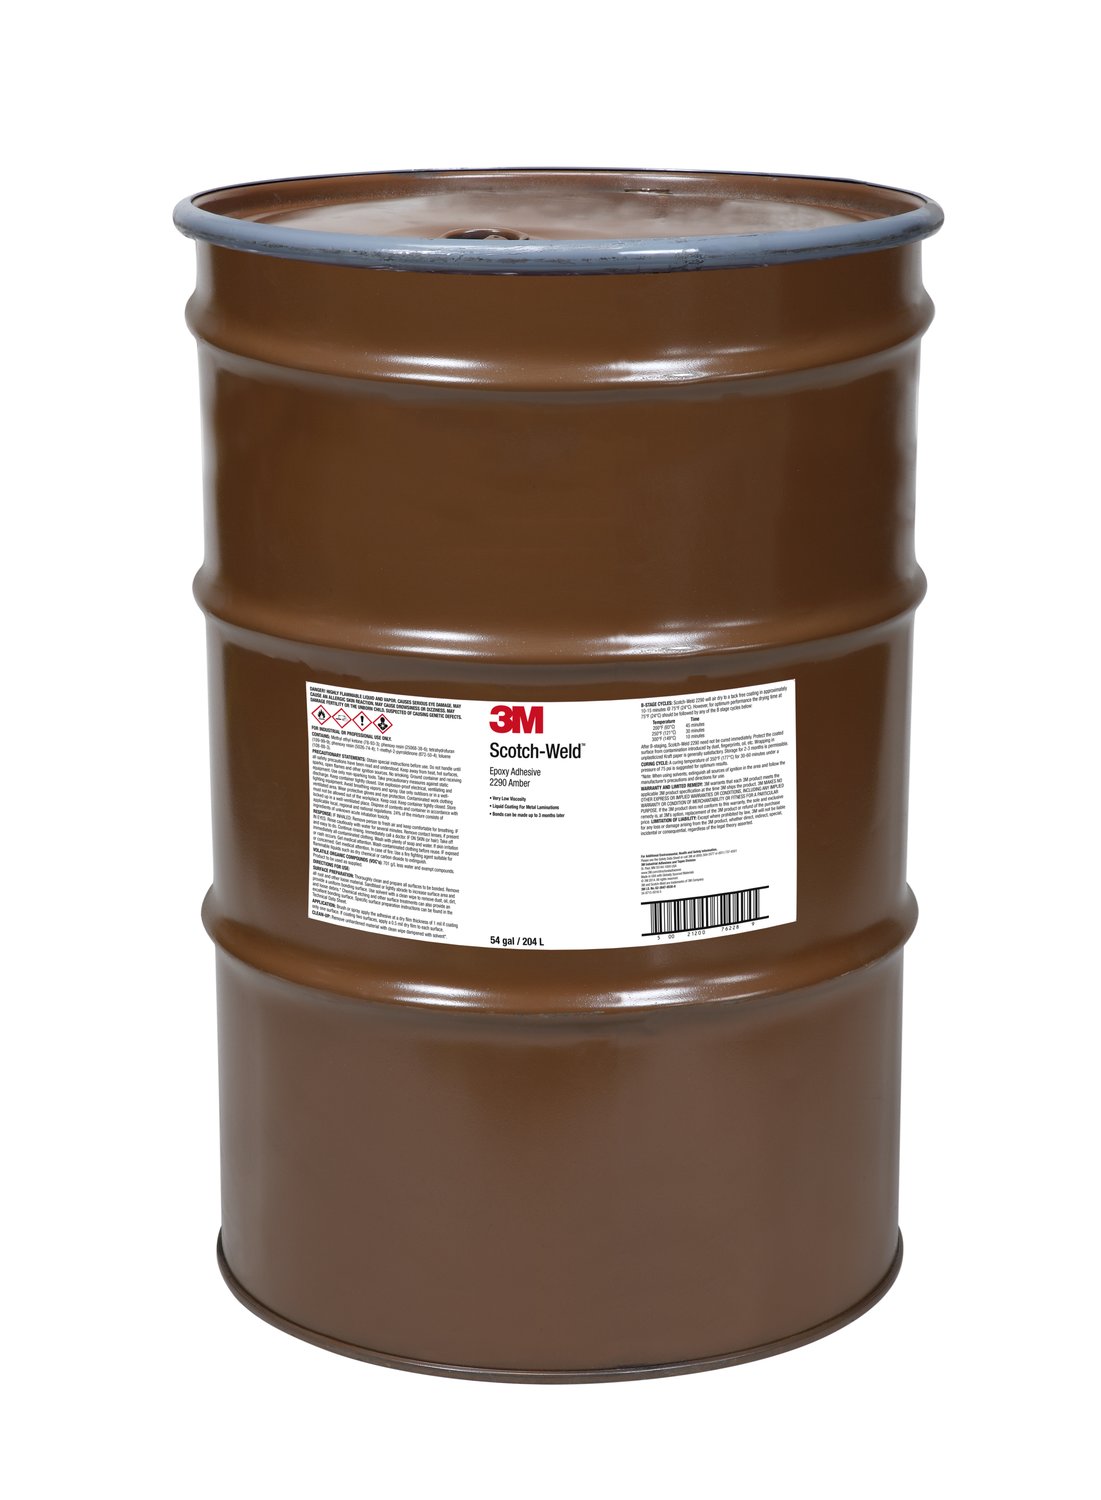 7100144896 - 3M Scotch-Weld Epoxy Adhesive/Coating 2290, Amber, 55 Gallon (54
Gallon Net), Drum